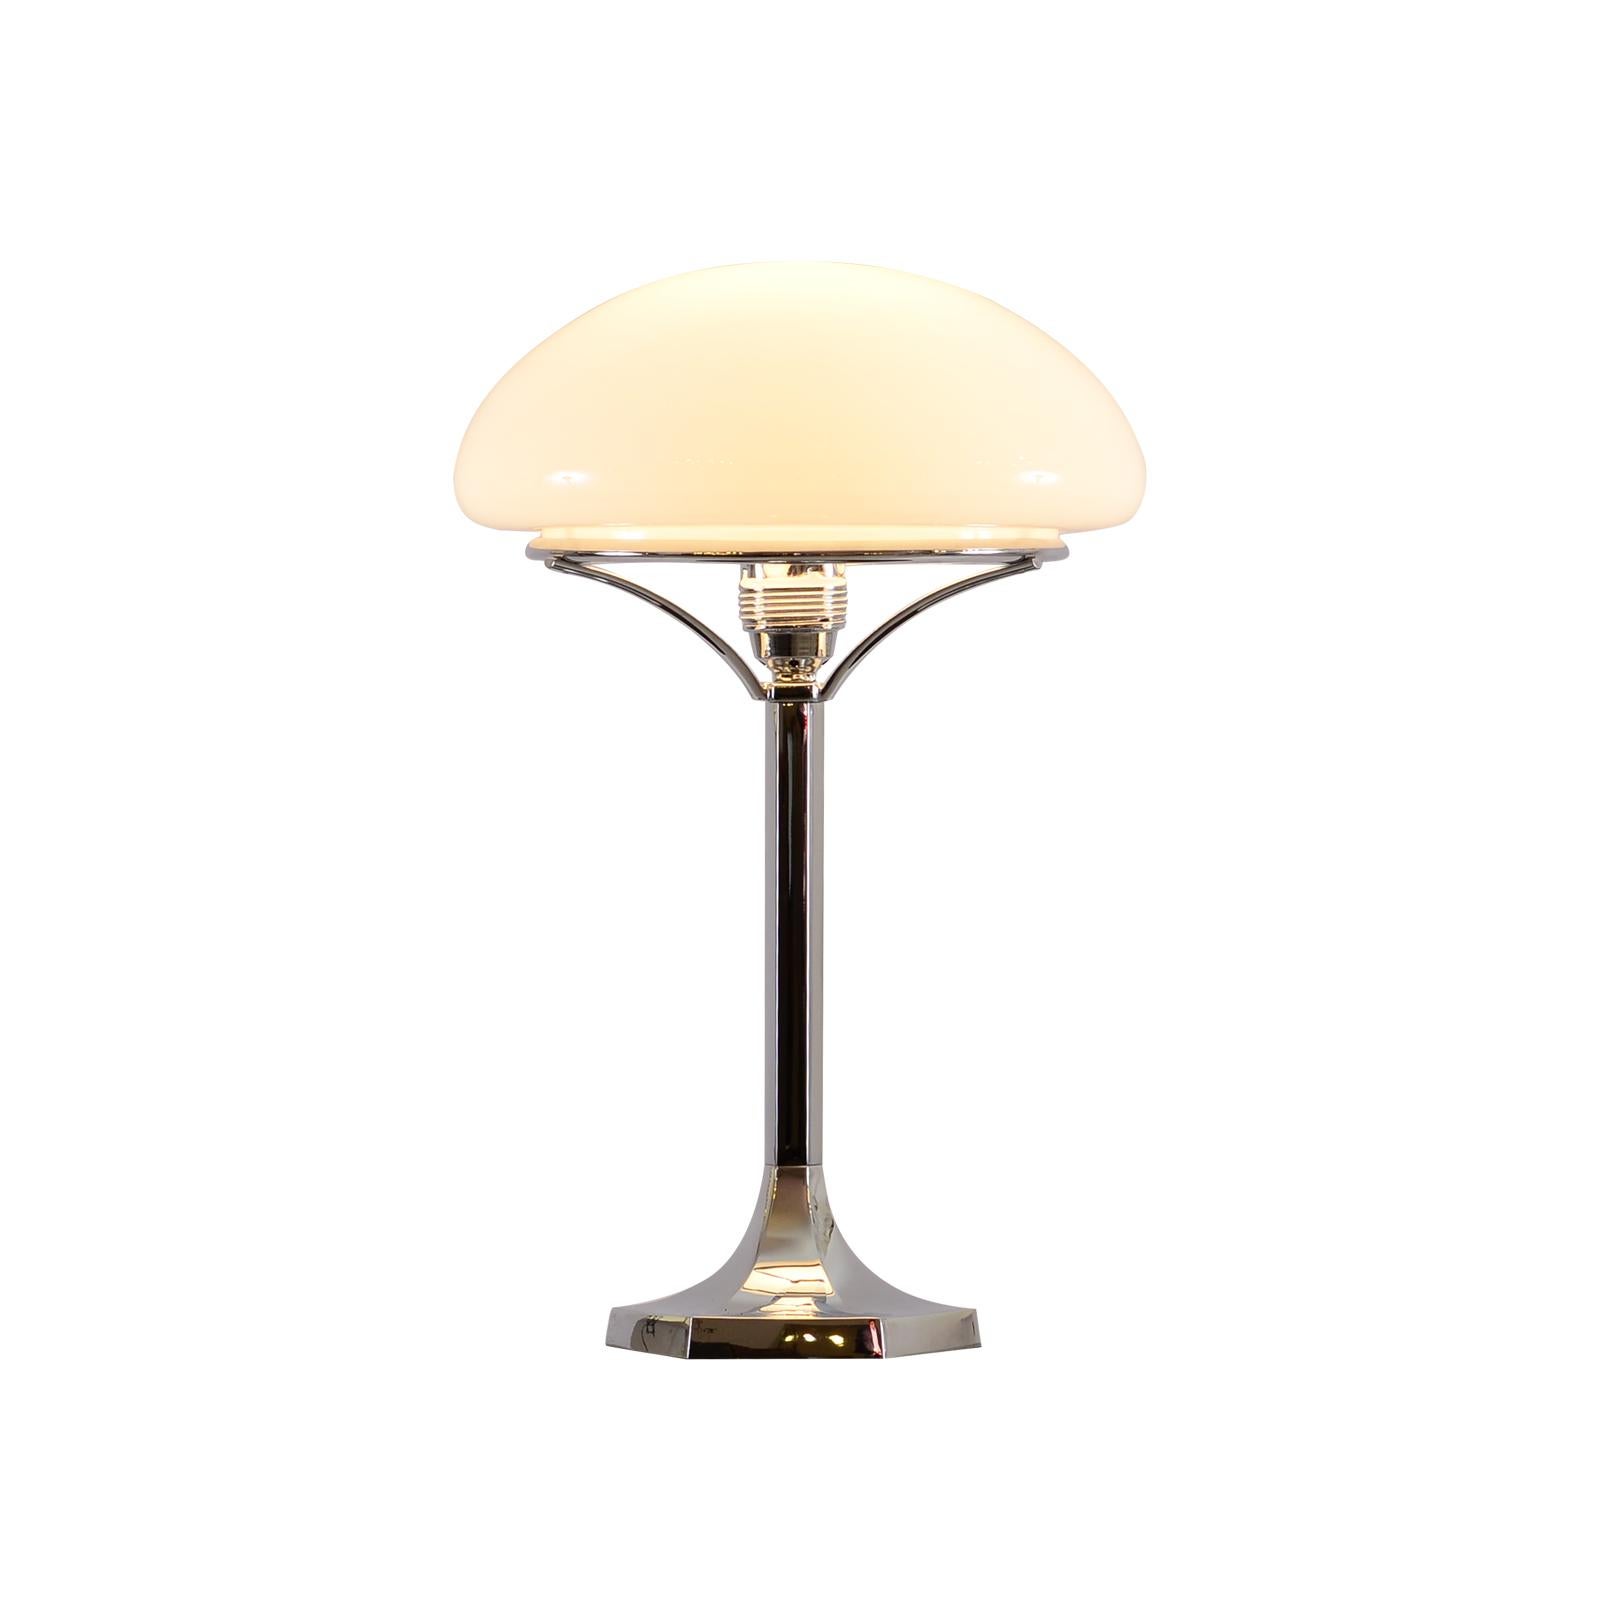 Austrian Josef Hoffmann Viennese Jugendstil Opaline Glass & Brass Table Lamp, Re Edition For Sale